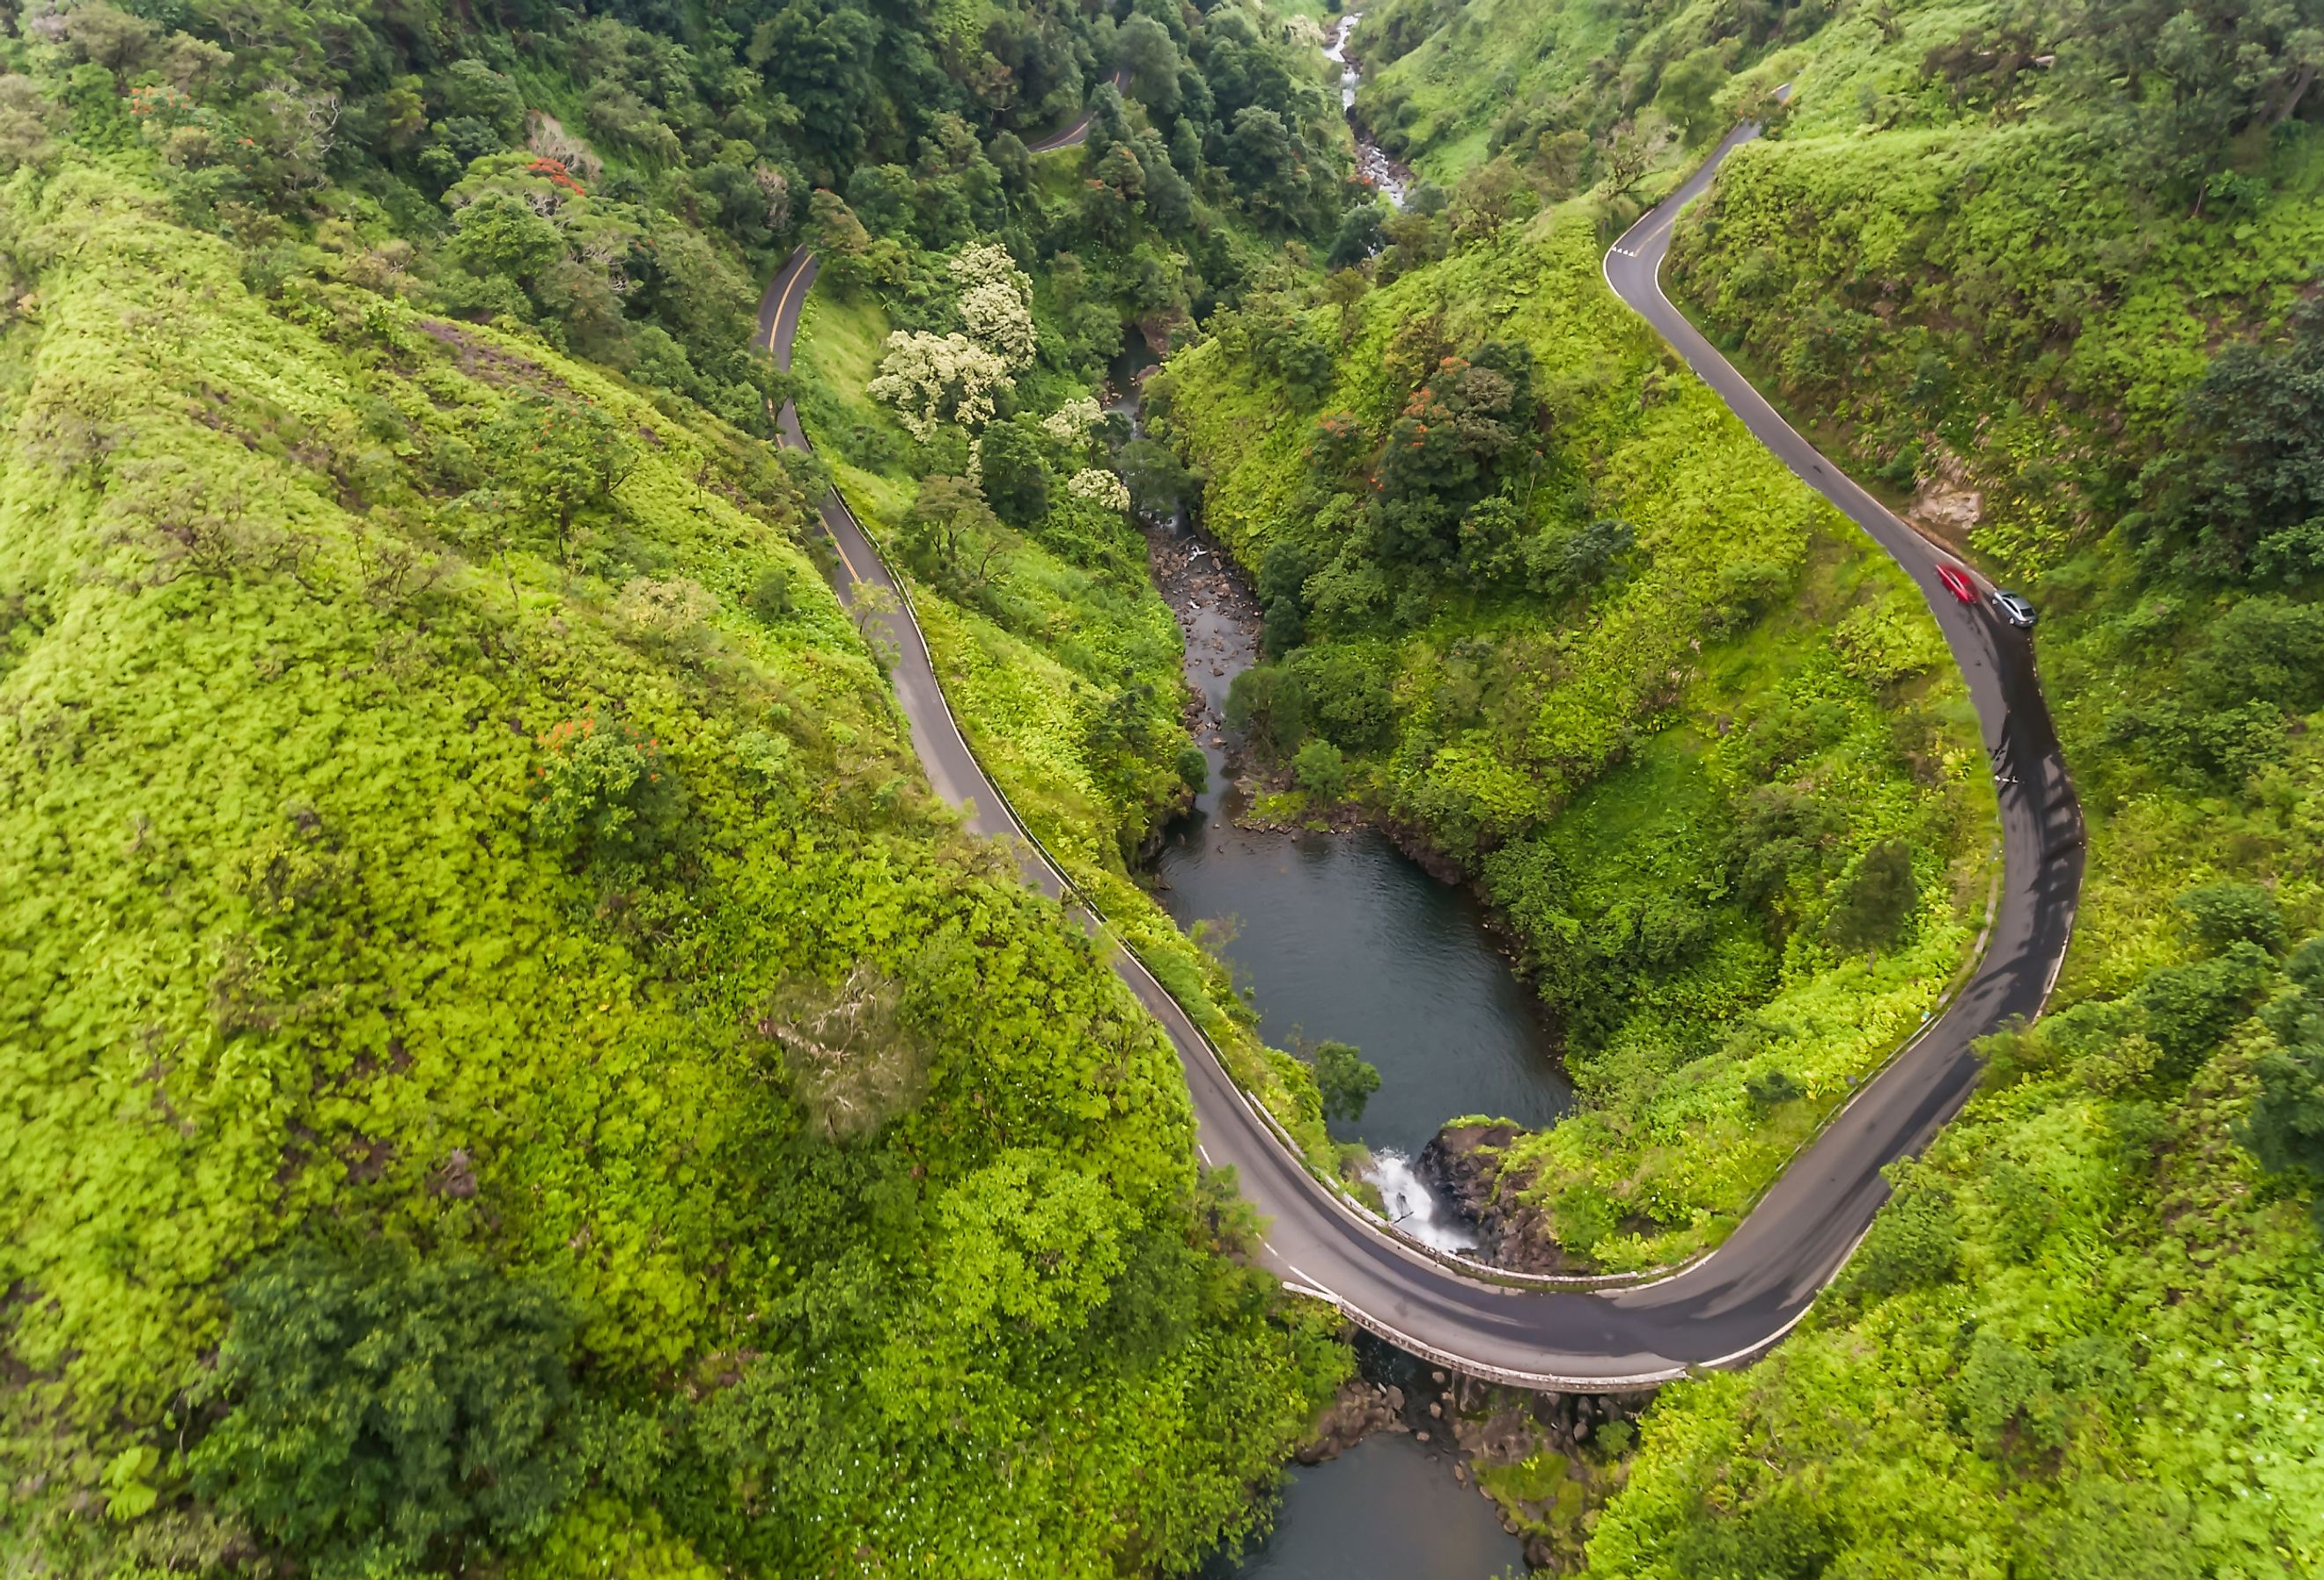 Aerial view of a waterfall on the road to Hana, Maui, Hawaii. Image credit Kelly Headrick via Shutterstock.